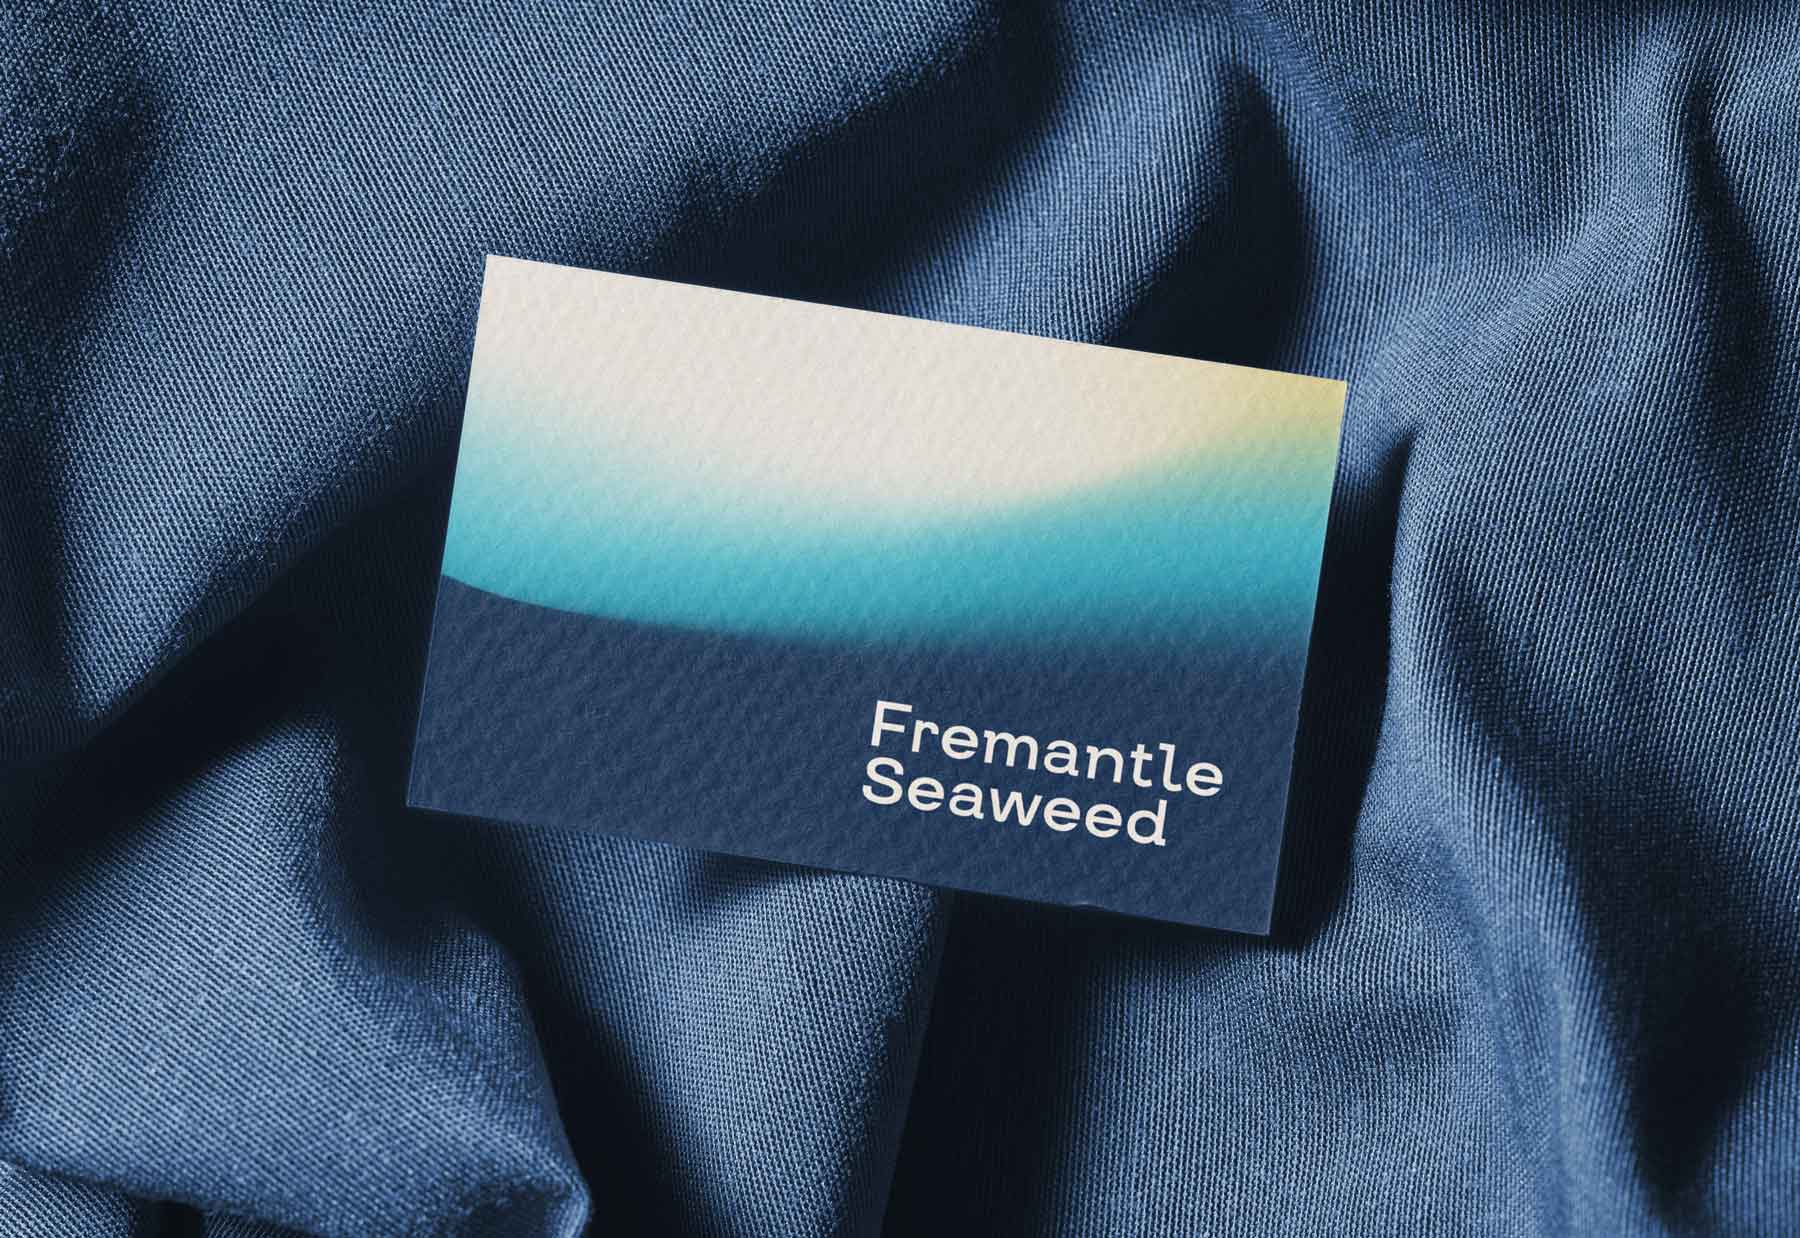 Fremantle Seaweed stationary brand application